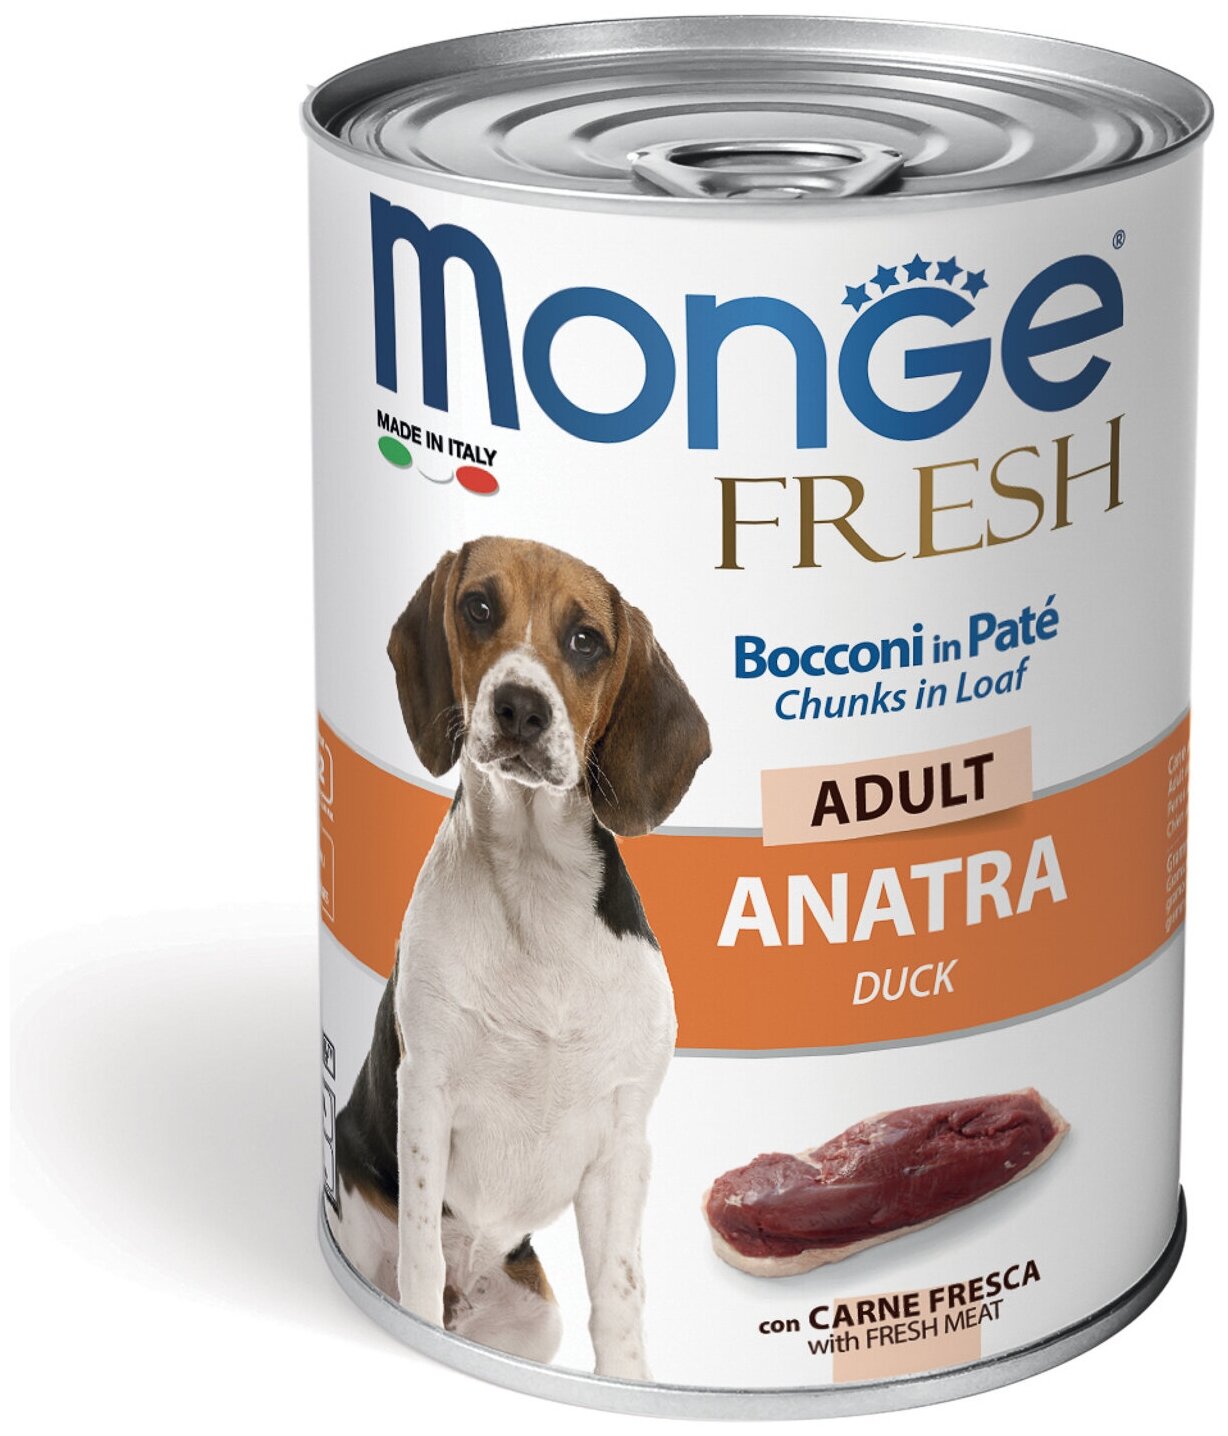 Влажный корм для собак Monge Fresh Мясной рулет, утка 1 уп. х 1 шт. х 400 г